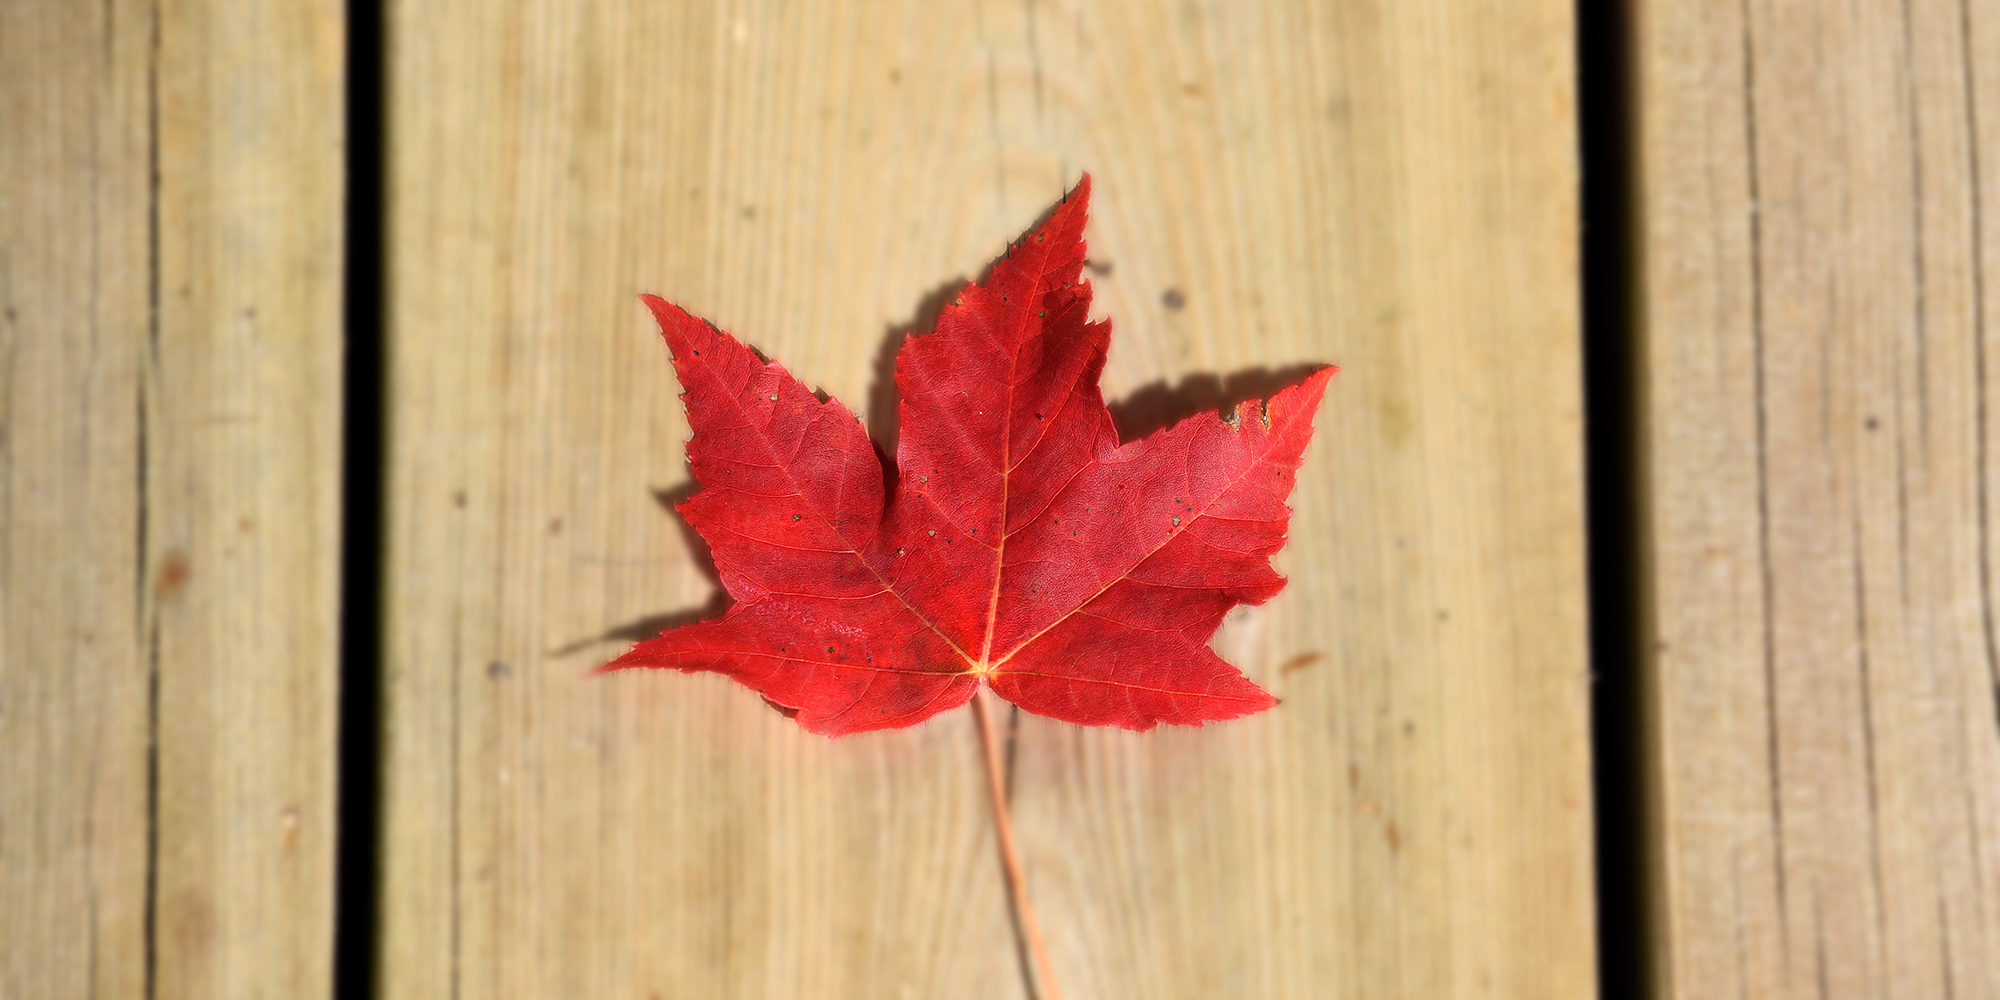 red maple leaf on wood deck